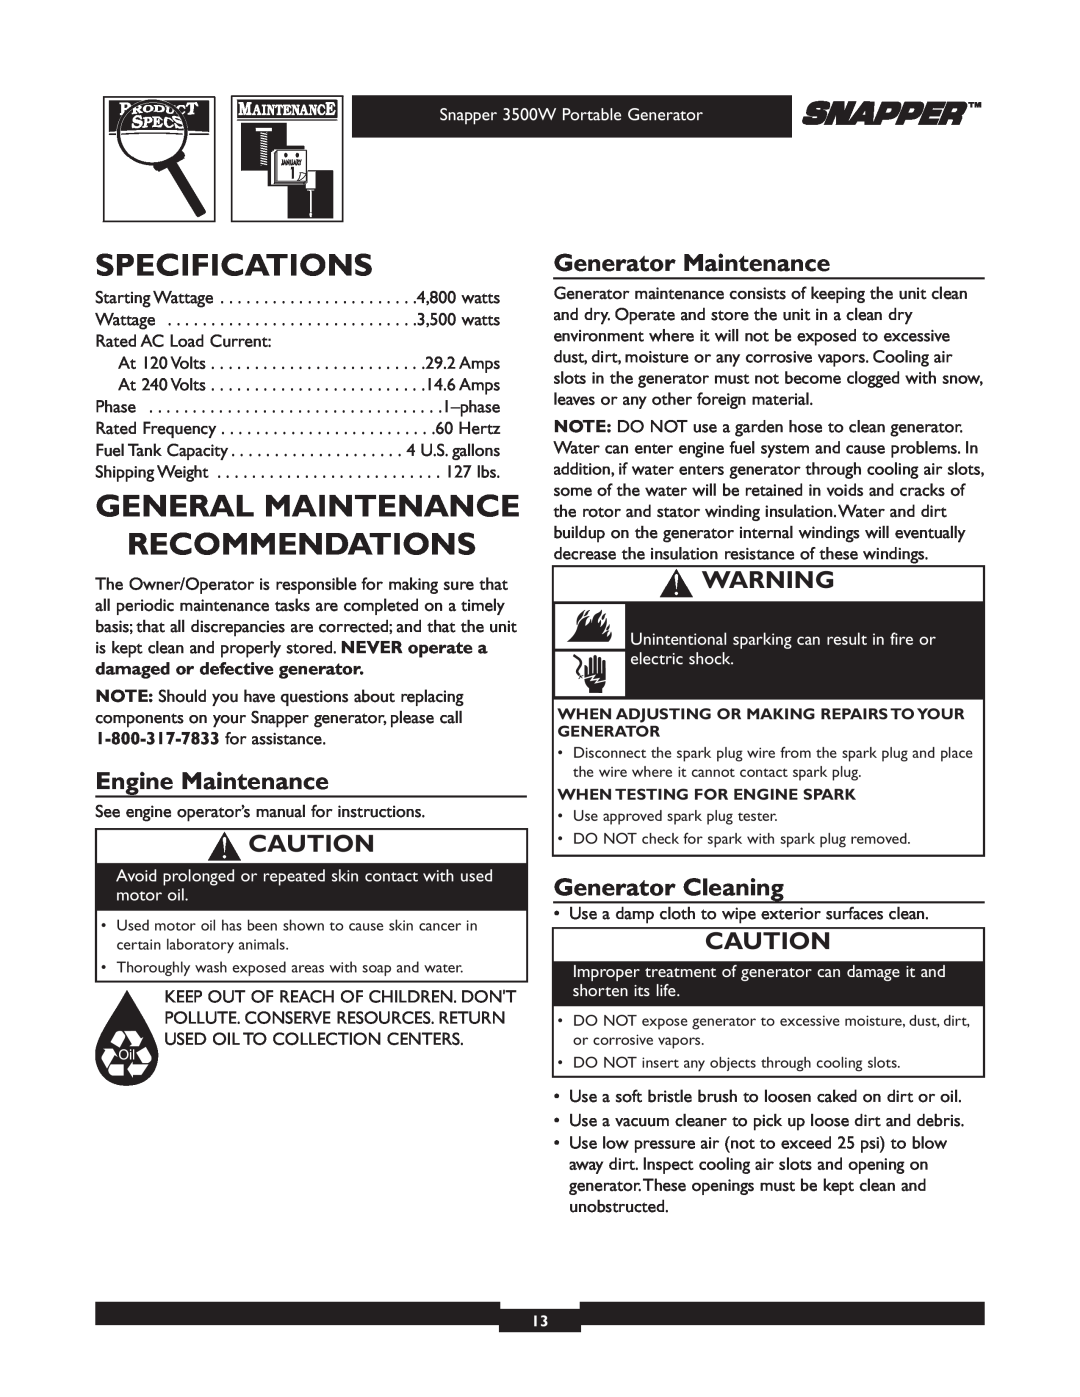 Snapper 3500 manual Specifications, General Maintenance Recommendations, Engine Maintenance, Generator Maintenance 